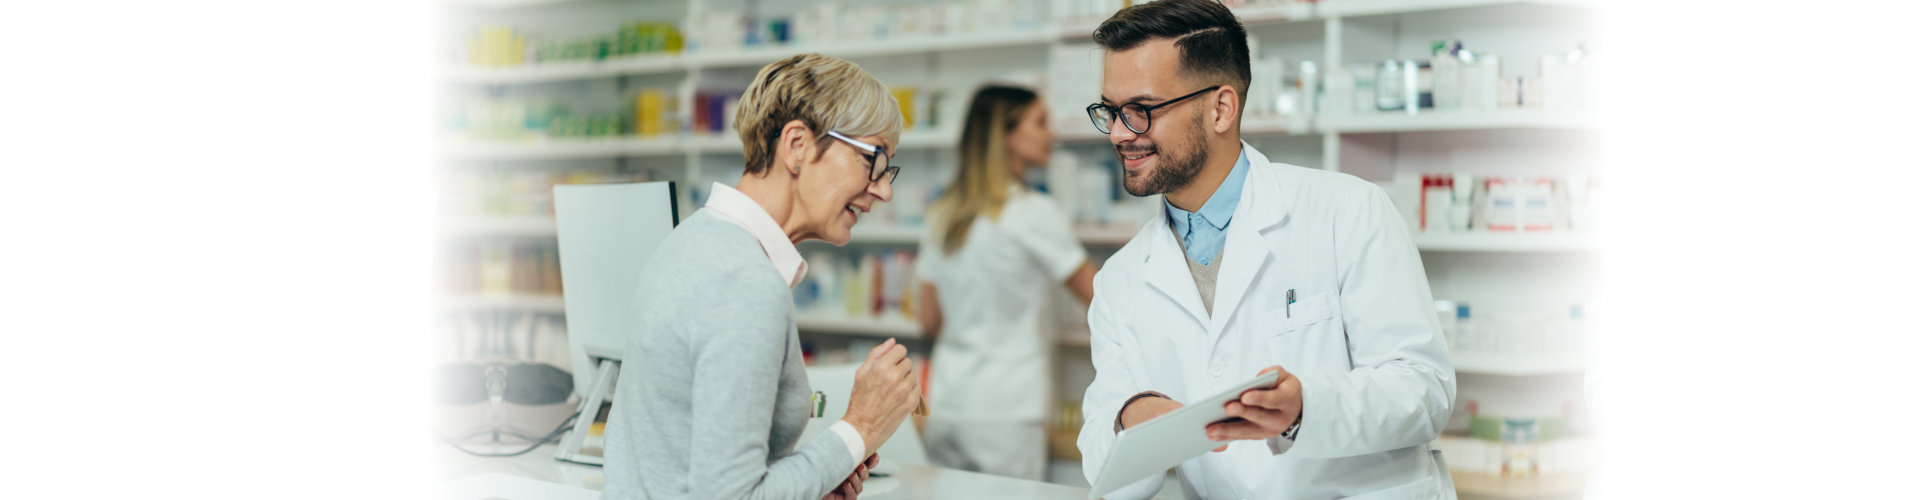 male pharmacist reminding medications to senior female customer